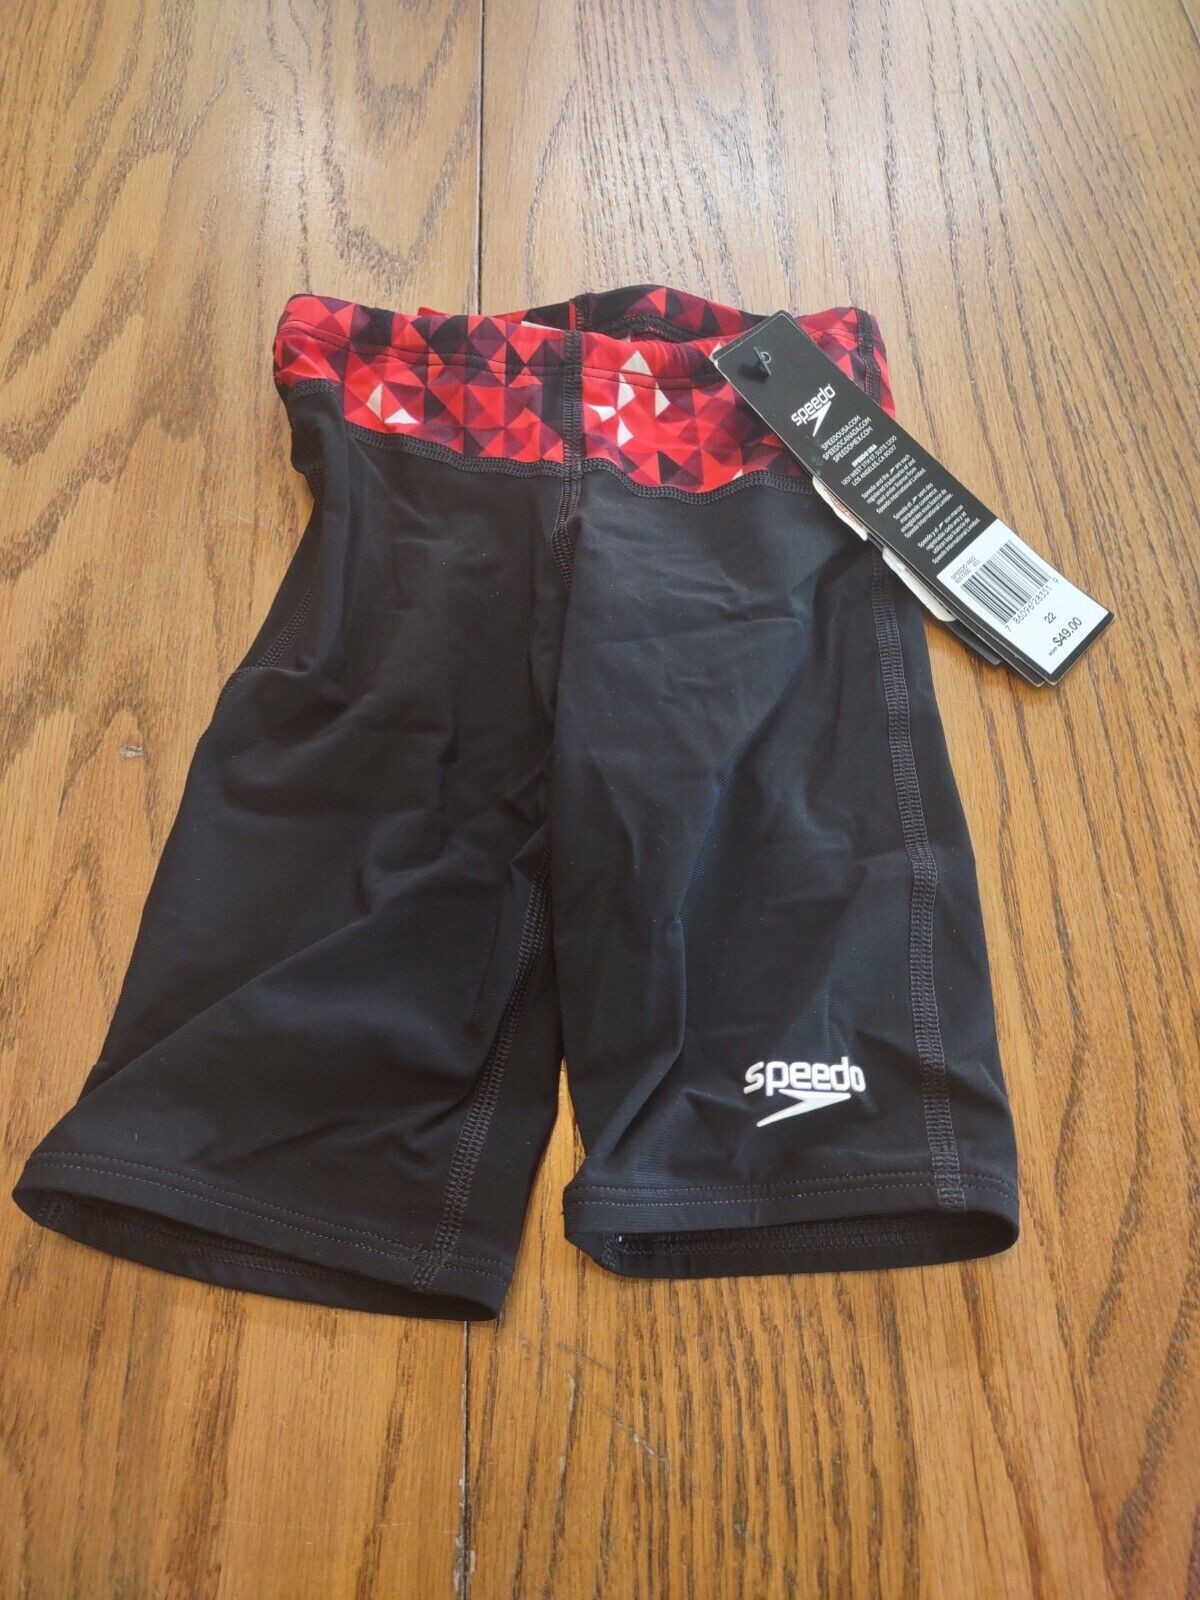 Speedo Size 22 Boys Red And Black Swim Shorts - $48.51